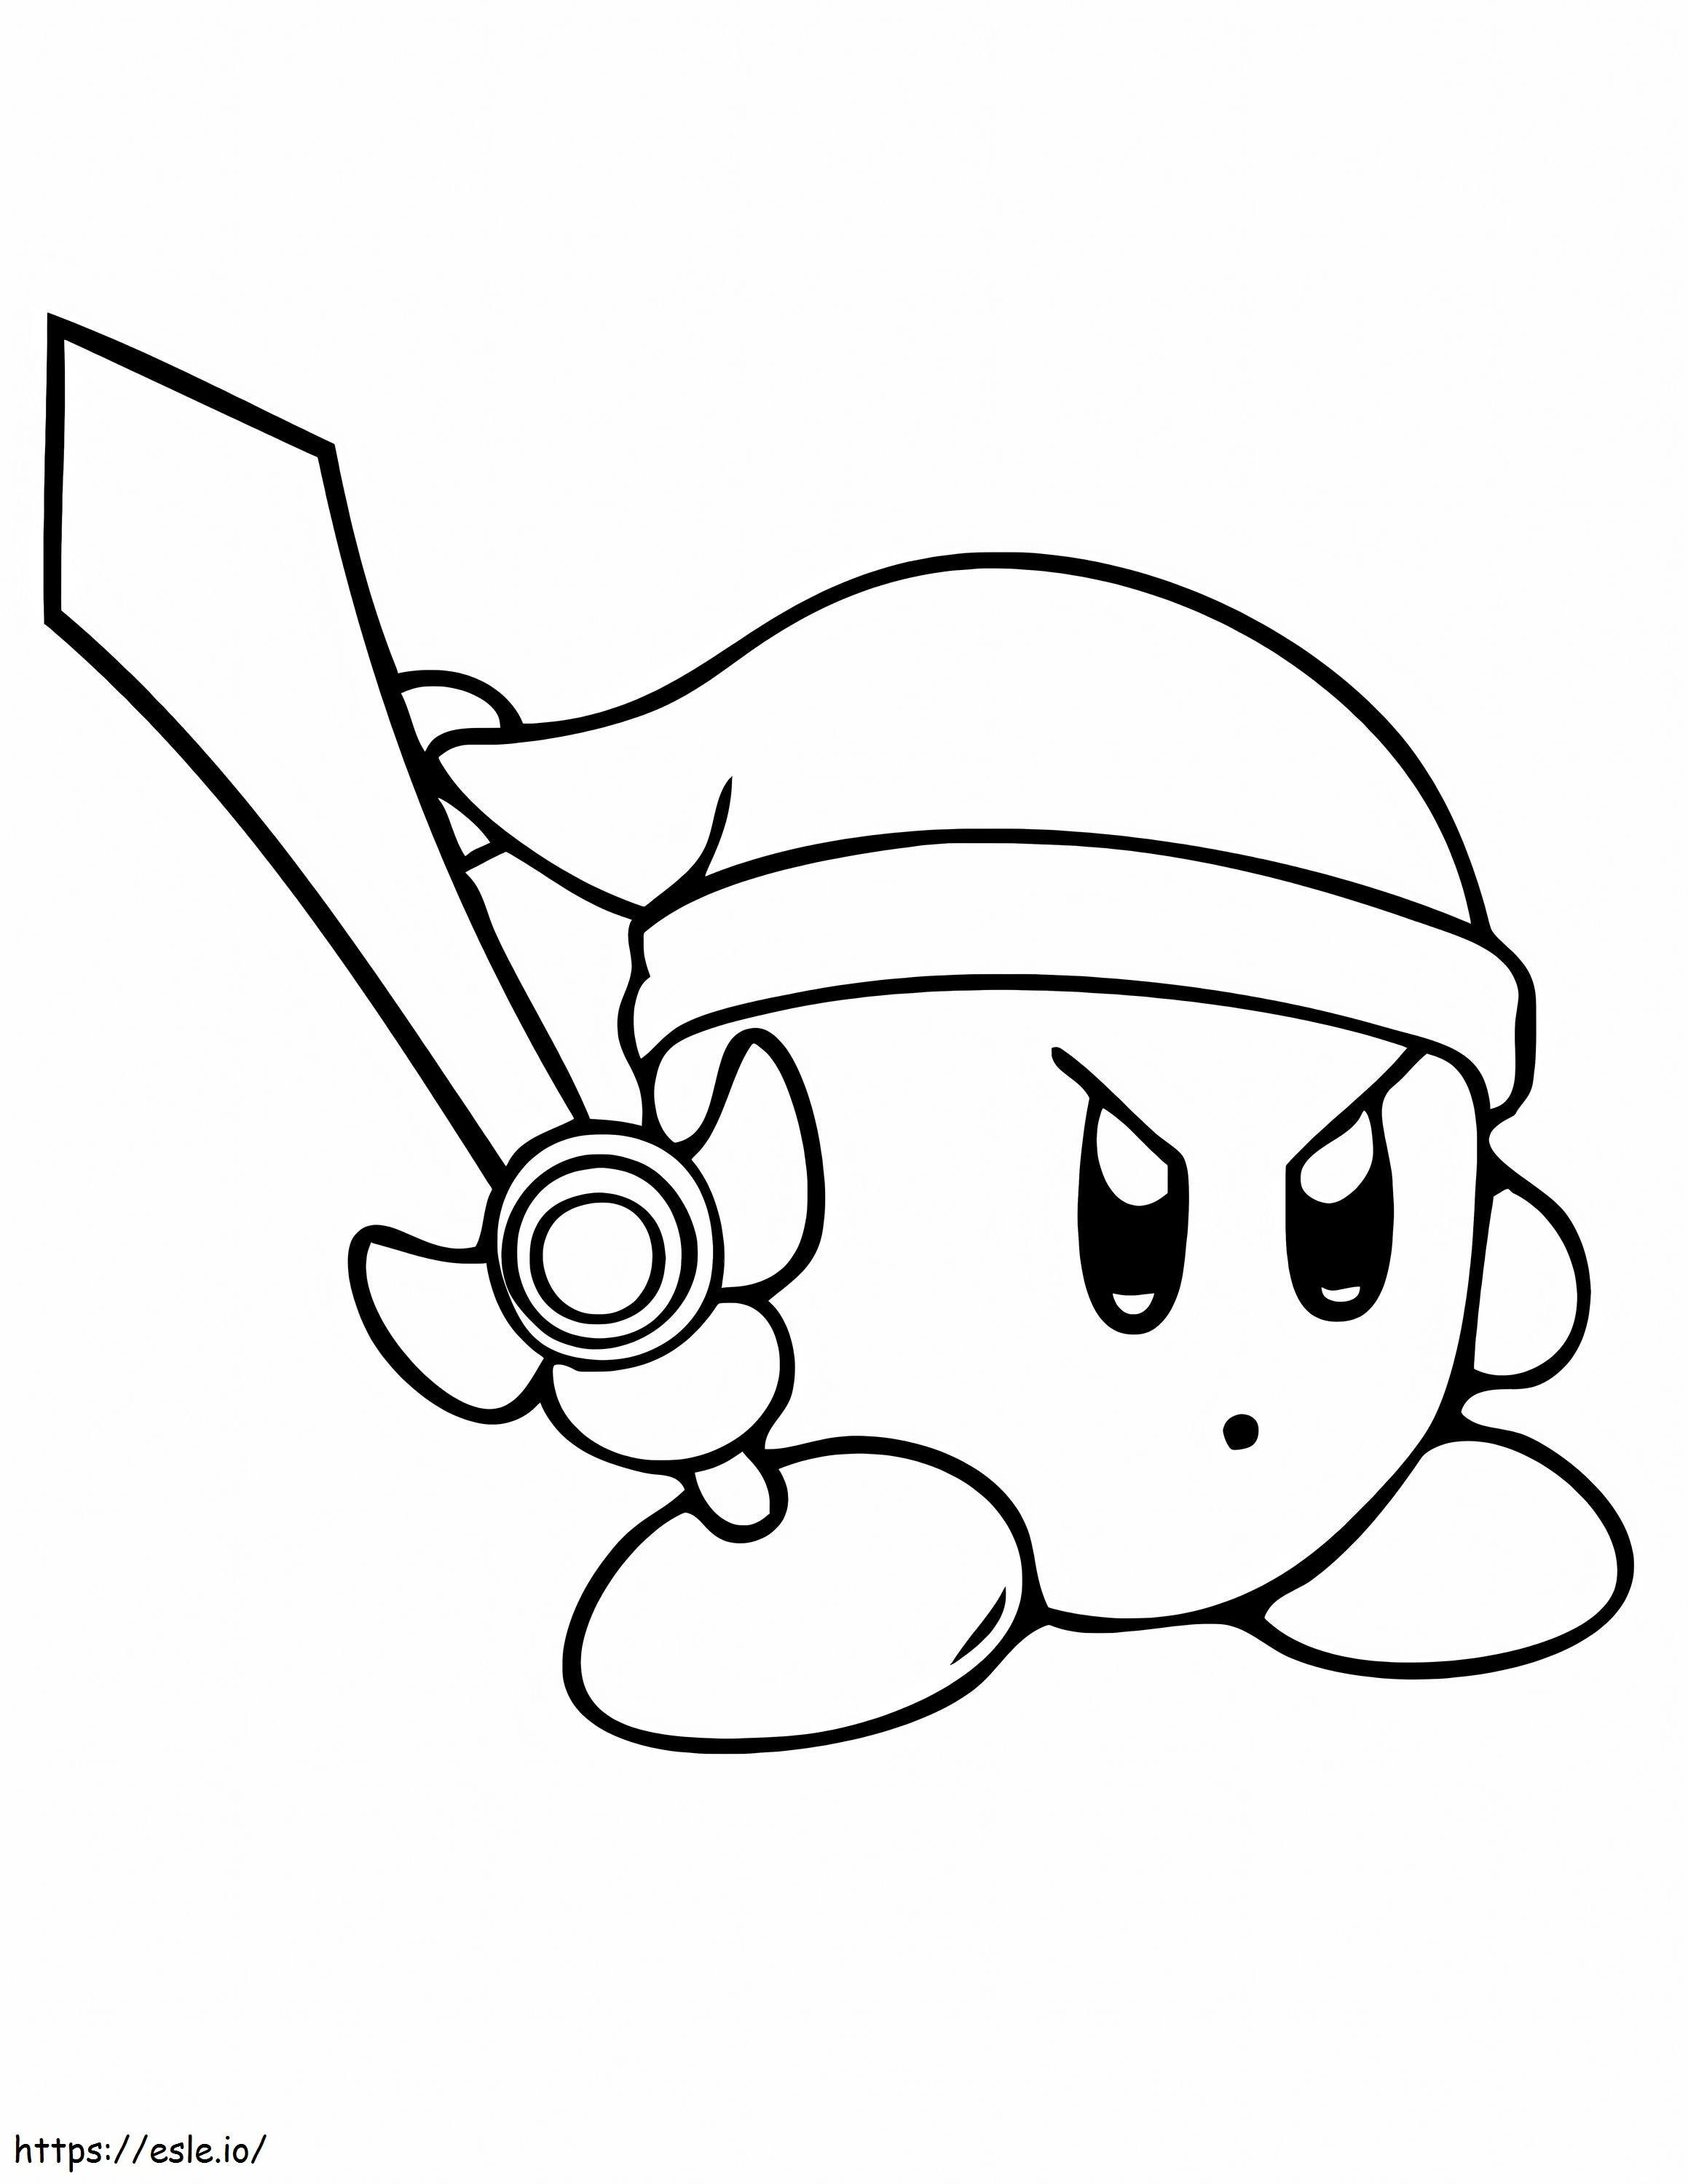 Kirby segurando a espada para colorir